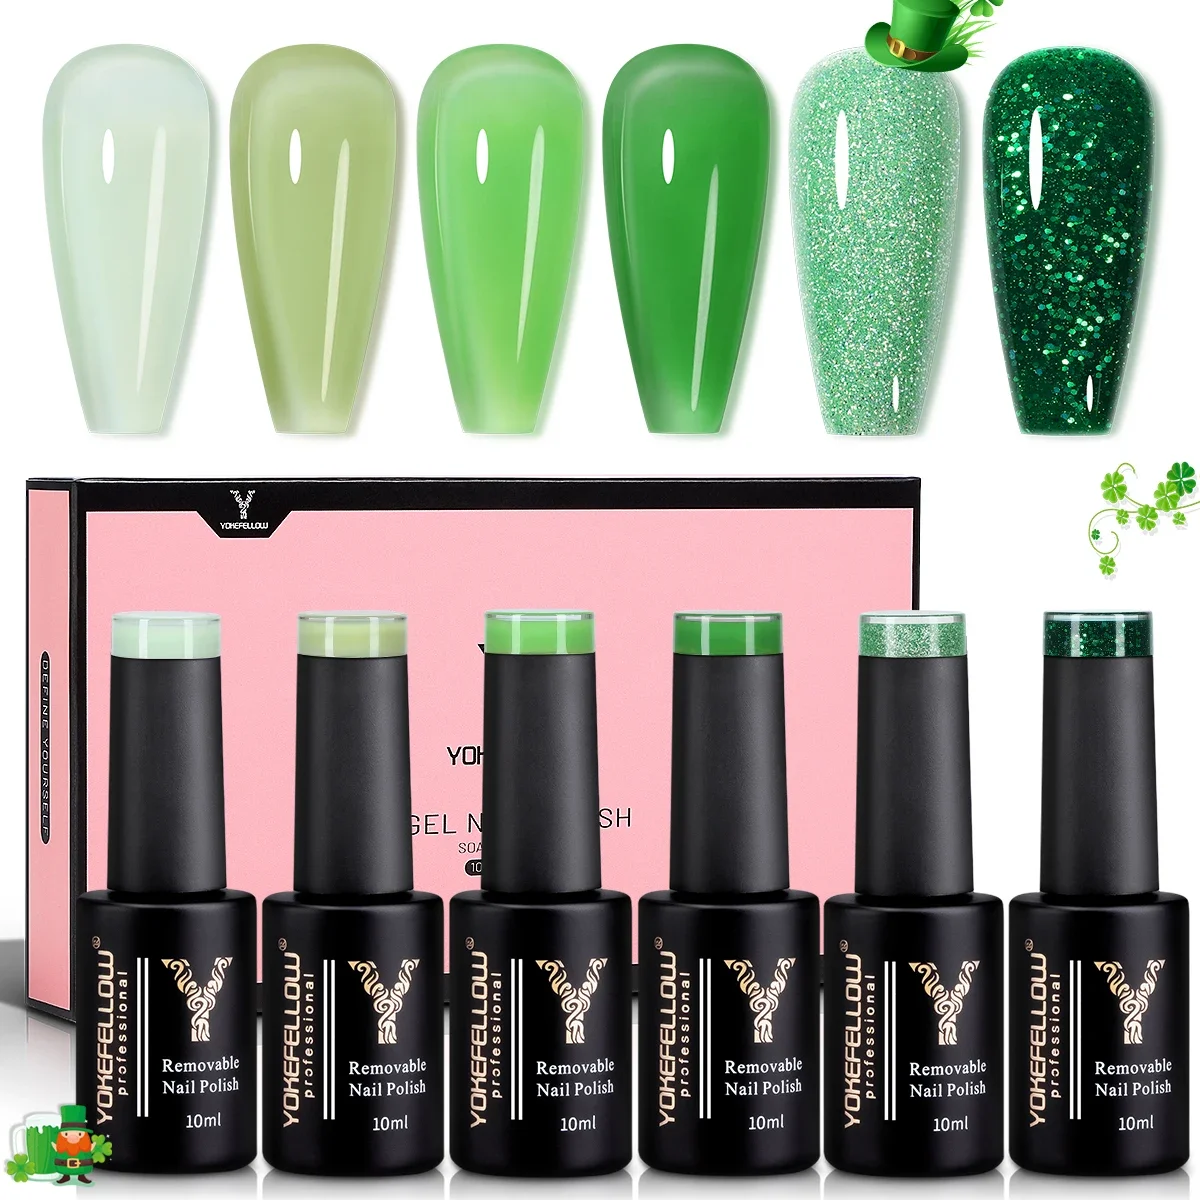 

NEW YOKEFELLOW Jelly Nude Green Gel Nail Polish 10ml Sheer Neutral Translucent Soak Off Gel Polish UV Light Cure for Nail ArtDIY